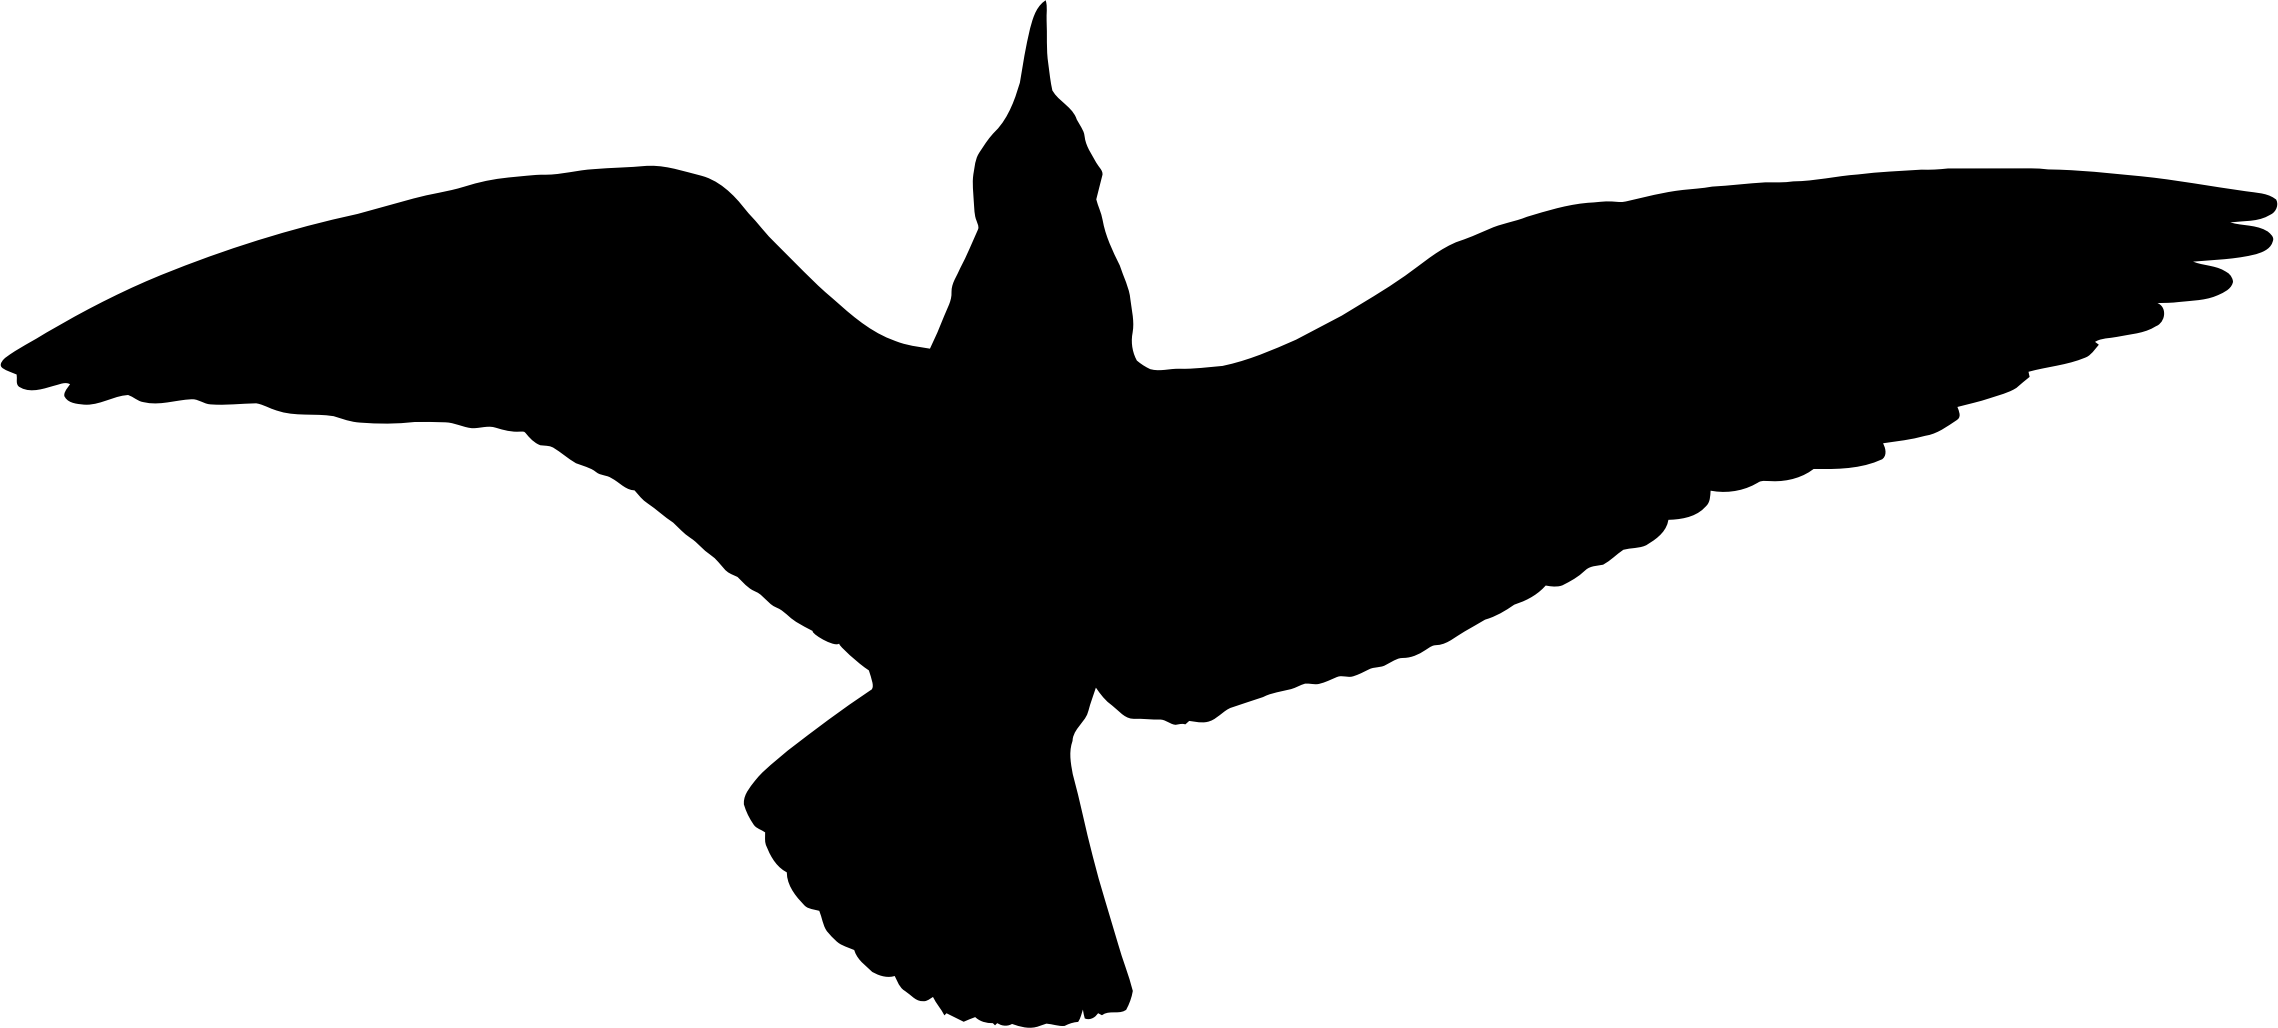 Seagull Silhouette - Seagull Silhouette (2278x1028)